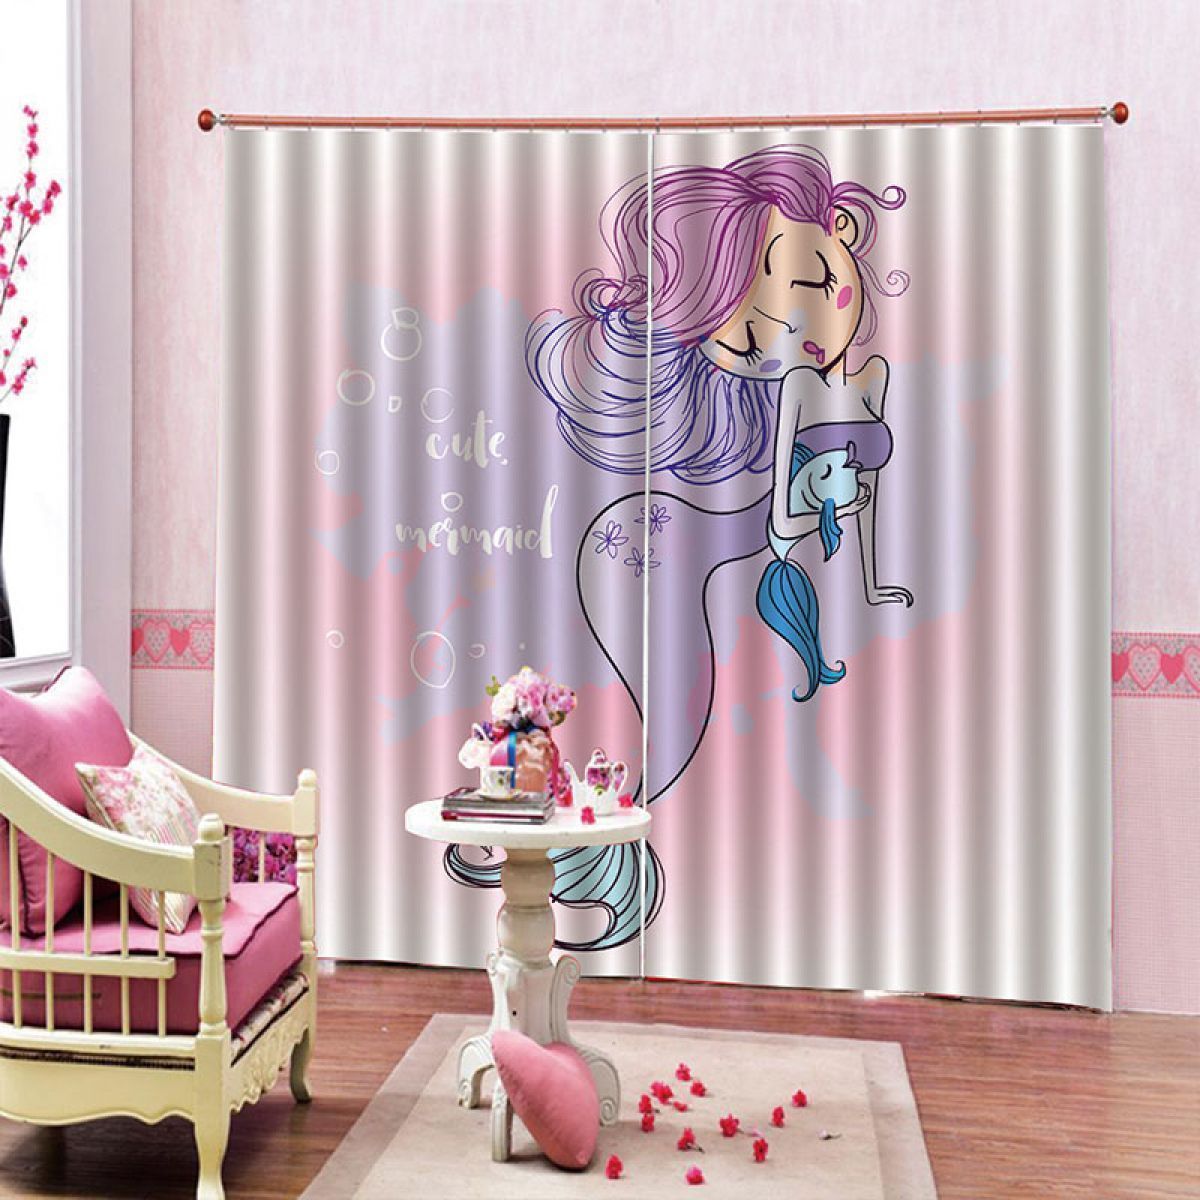 3d Cartoon Mermaid Printed Window Curtain Home Decor